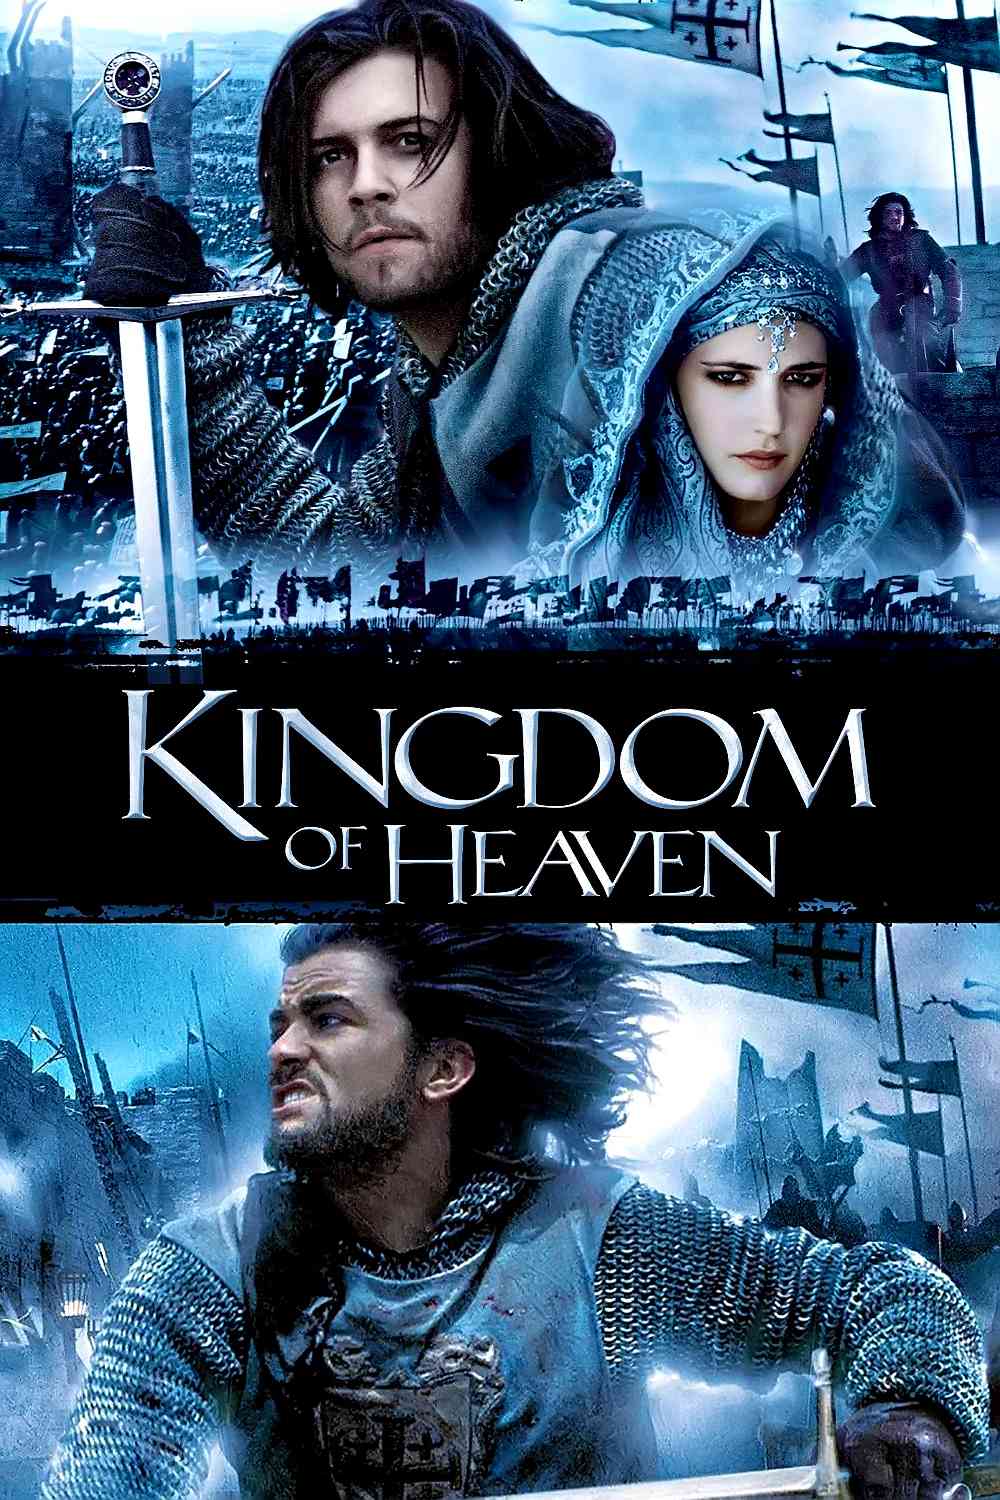 FULL MOVIE: Kingdom of Heaven (2005)